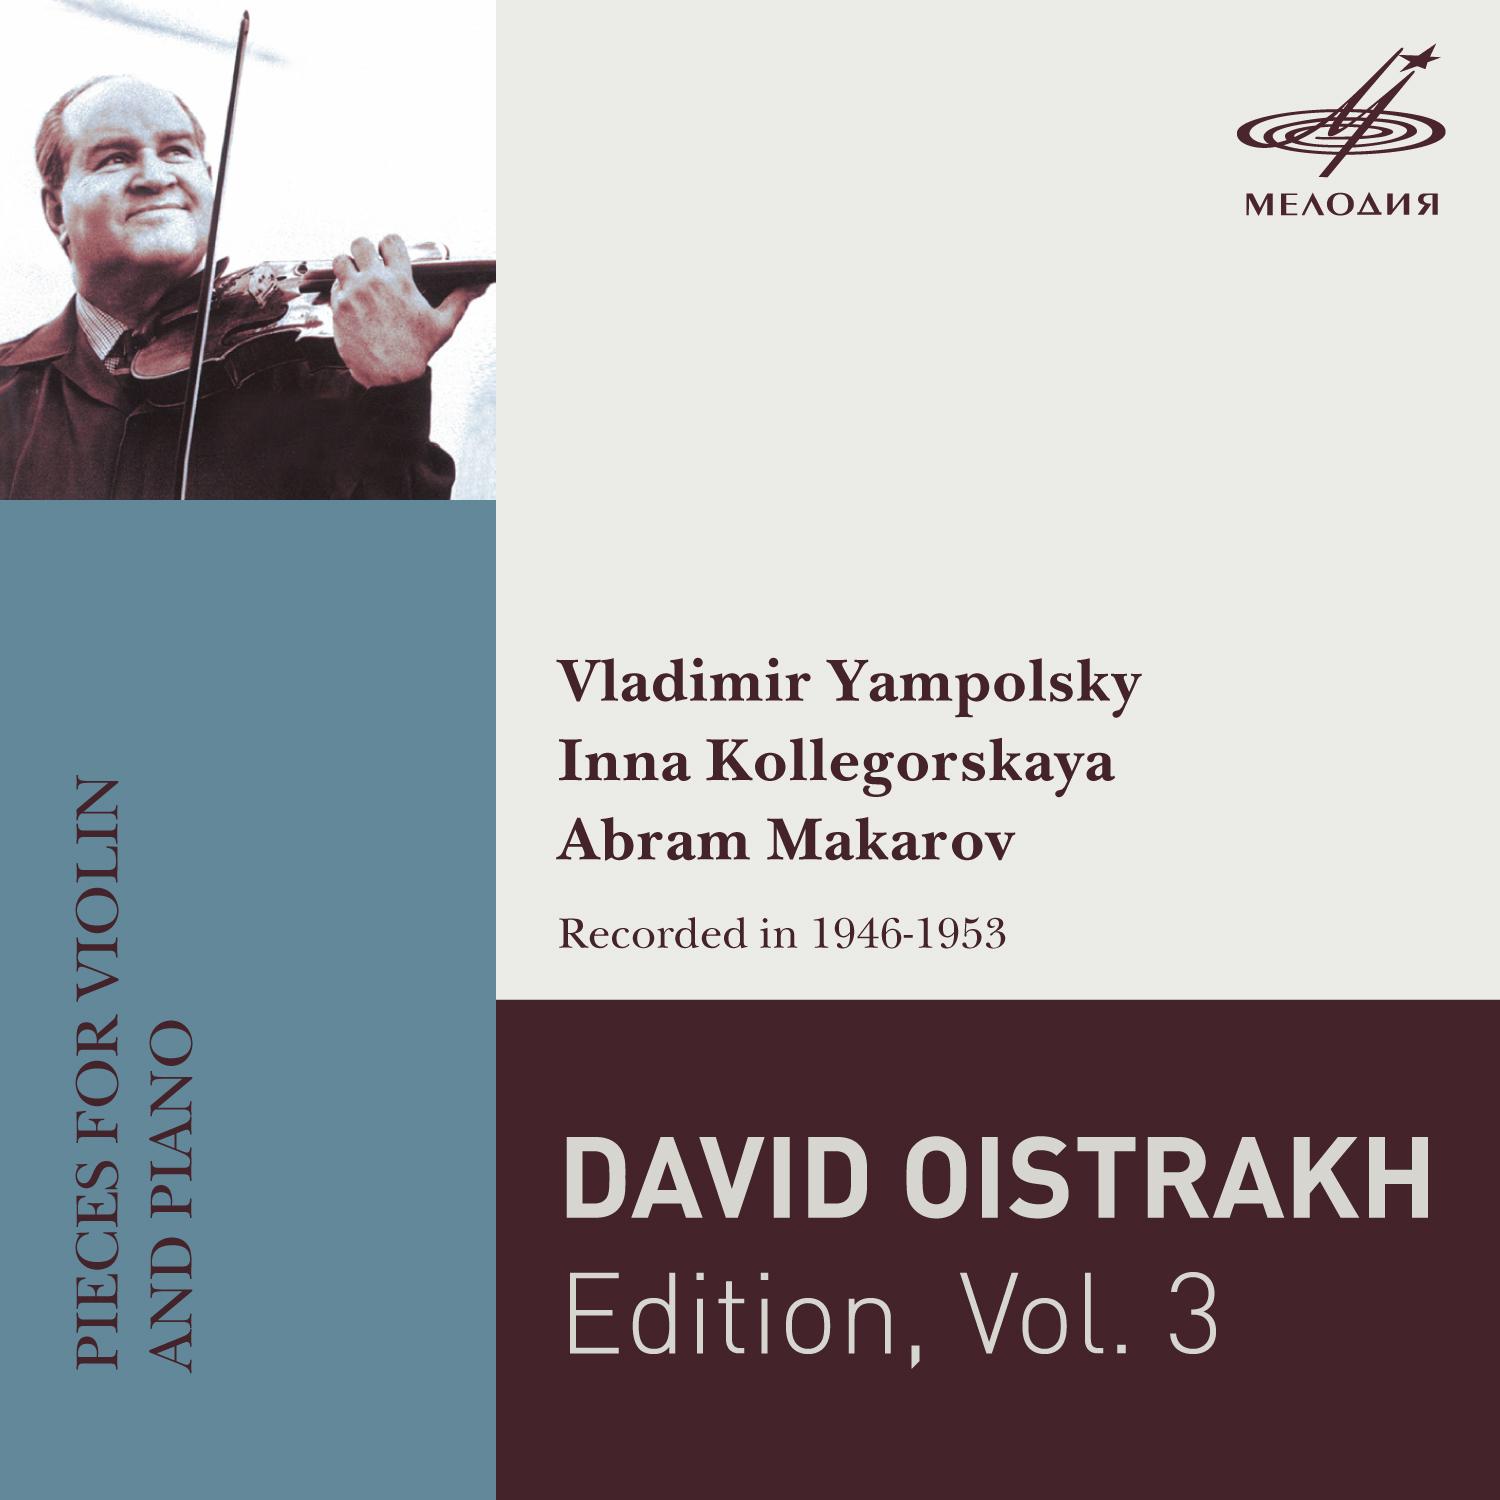 David Oistrakh Edition, Vol. 3